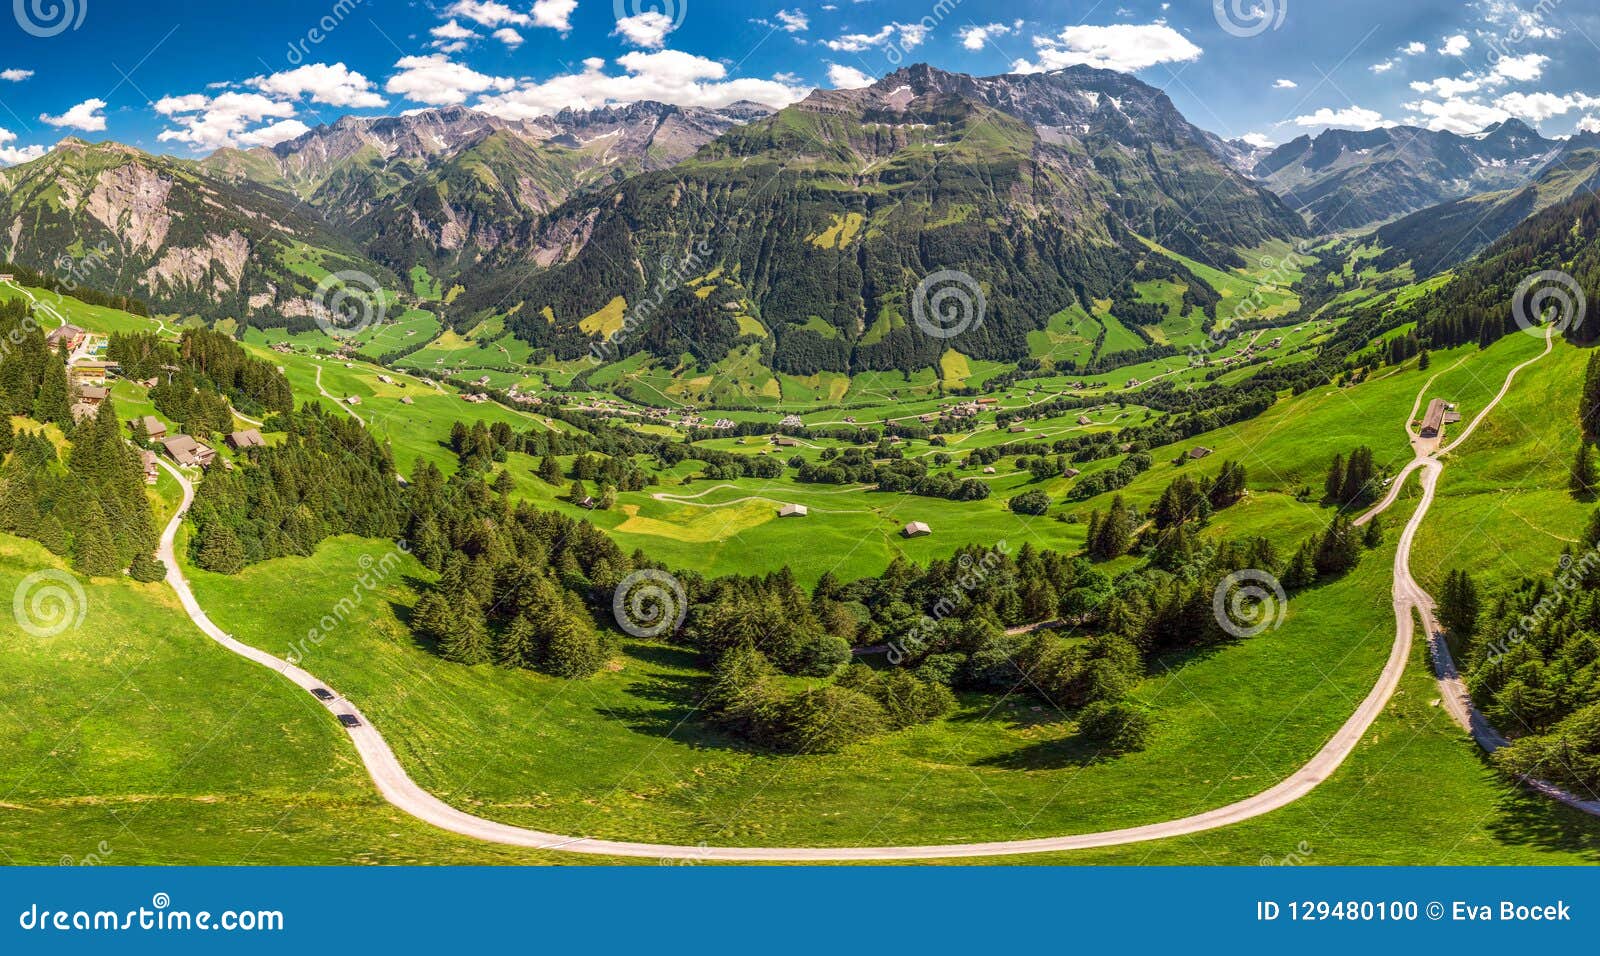 aerial view of elm village and swiss mountains - piz segnas, piz sardona, laaxer stockli from ampachli, glarus, switzerland, europ